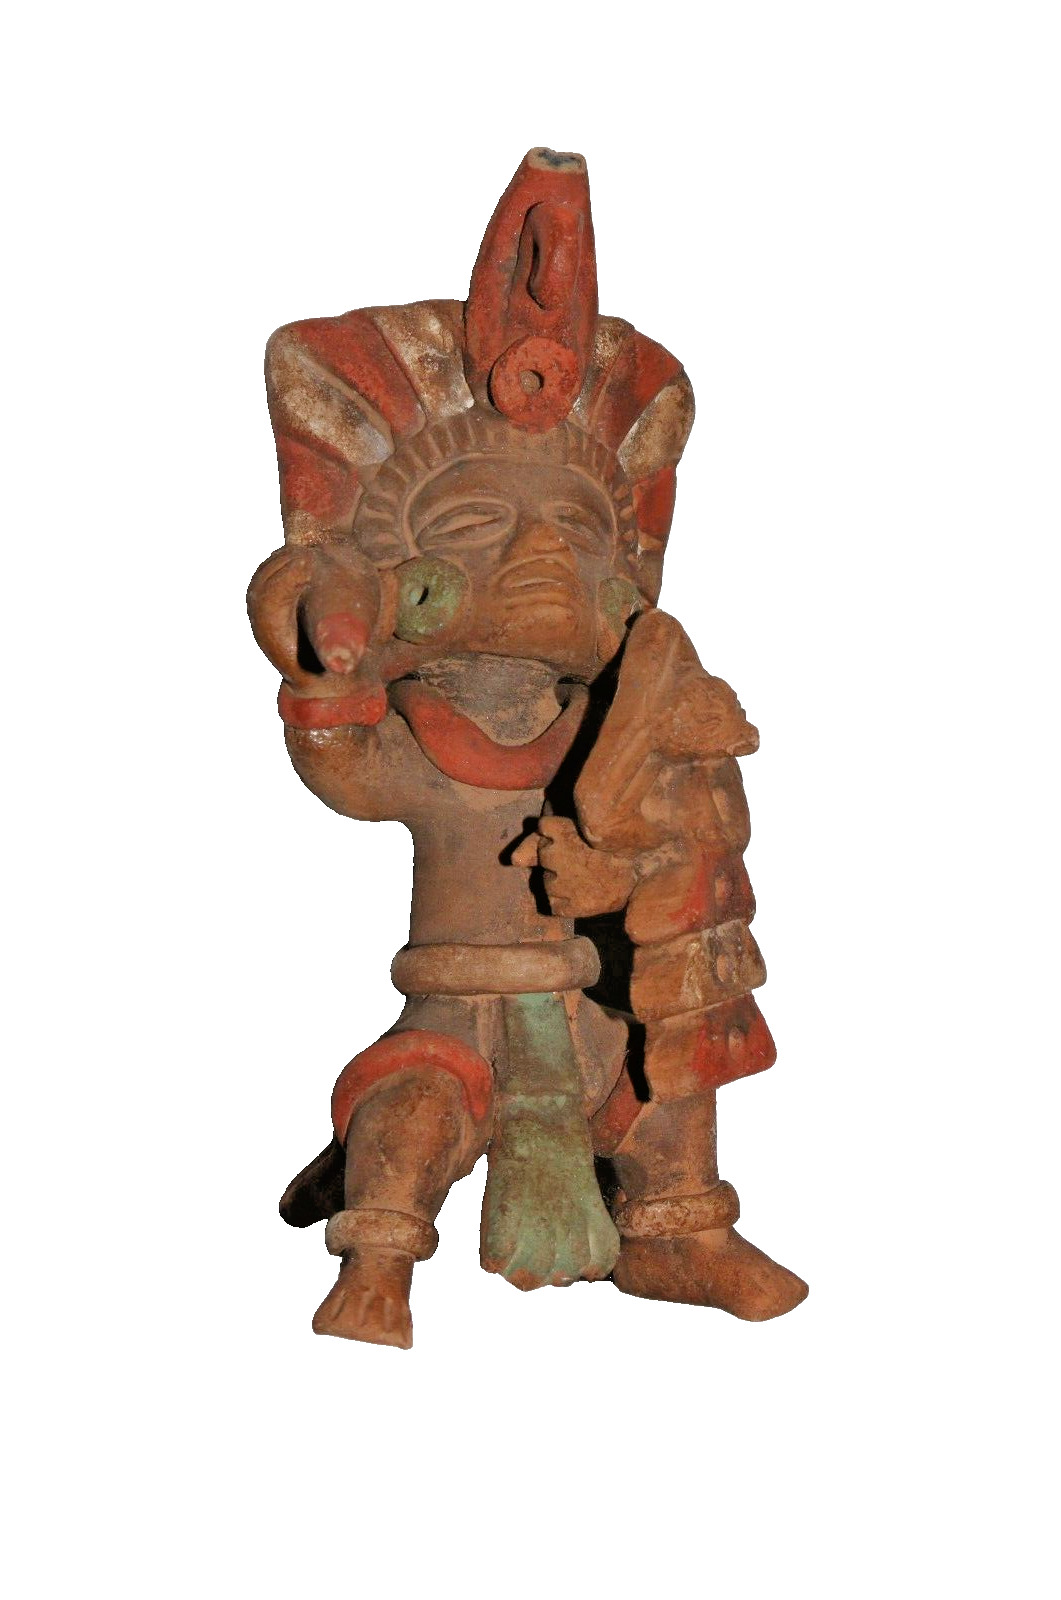 Vintage Mexicana / Mayan figure multi-color warrior figure cultural ethnic